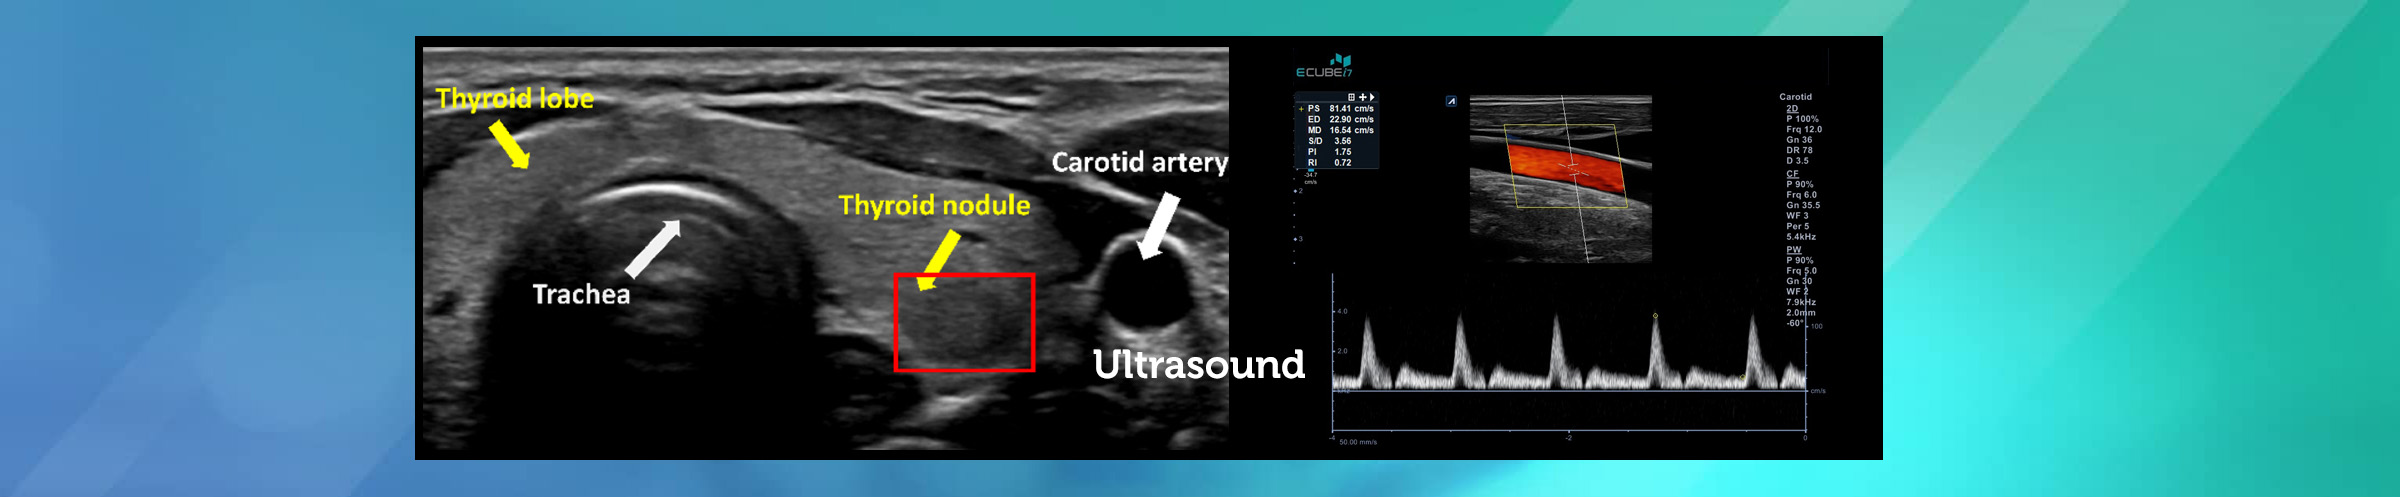 Breast, Thyroid and Carotid Ultrasound